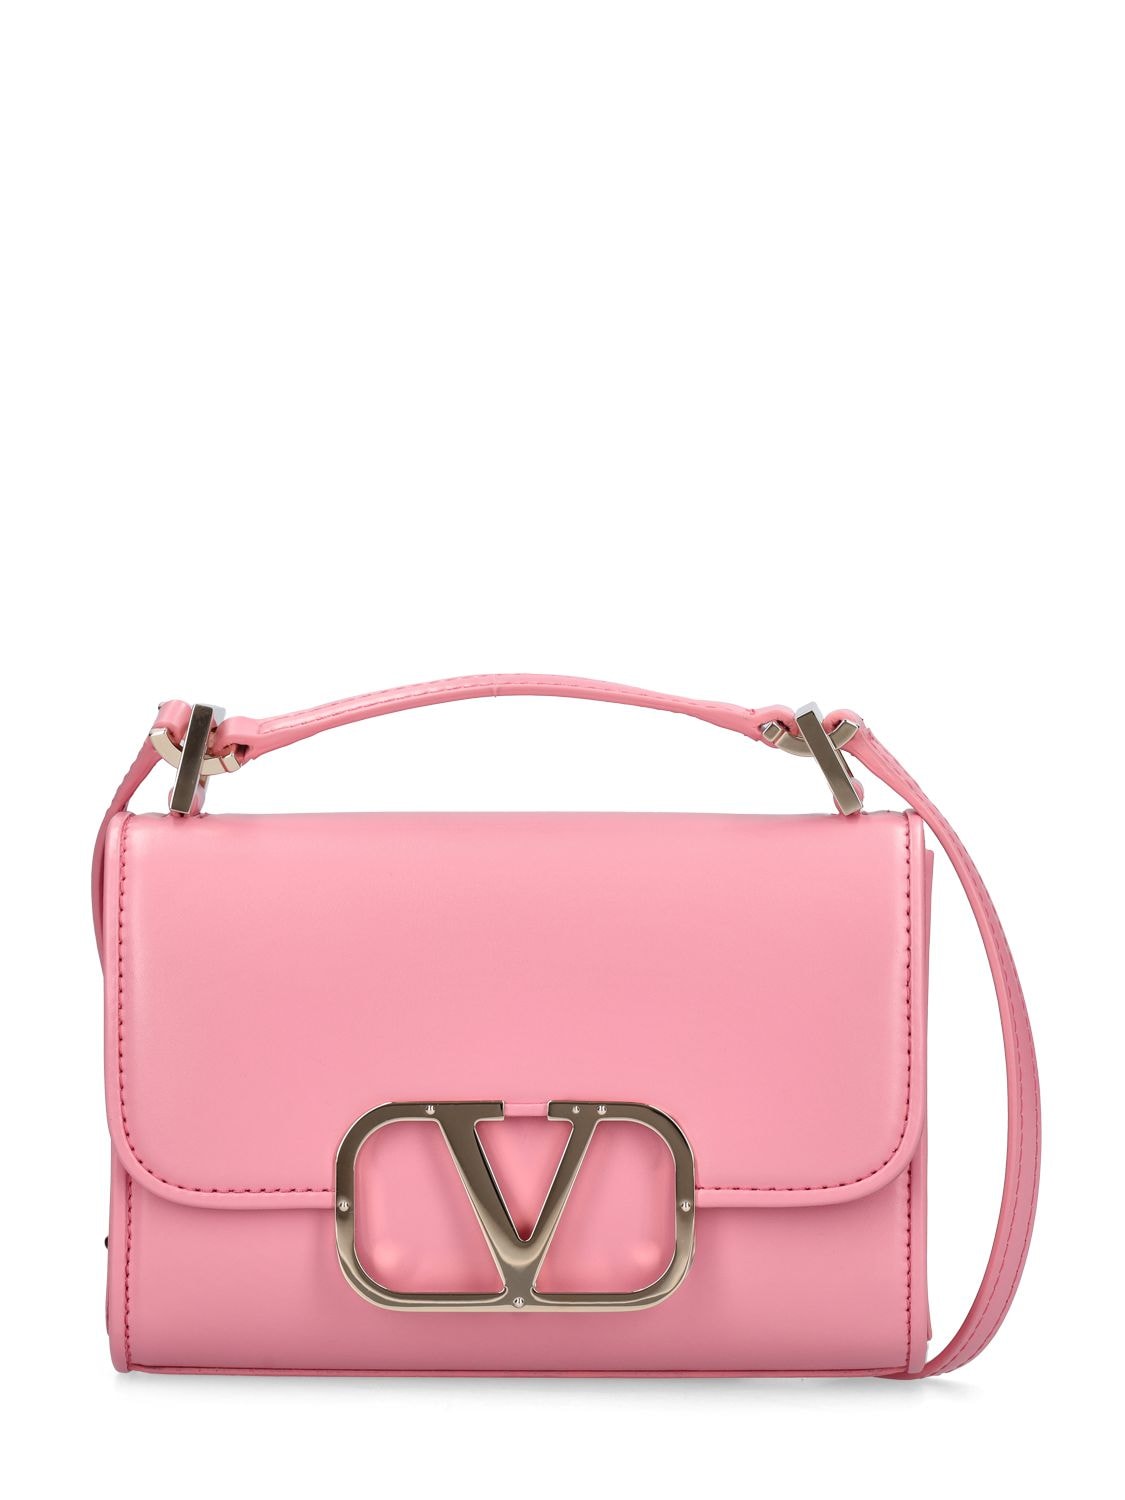 Valentino Garavani Small V Logo Type Shoulder Bag in Pink